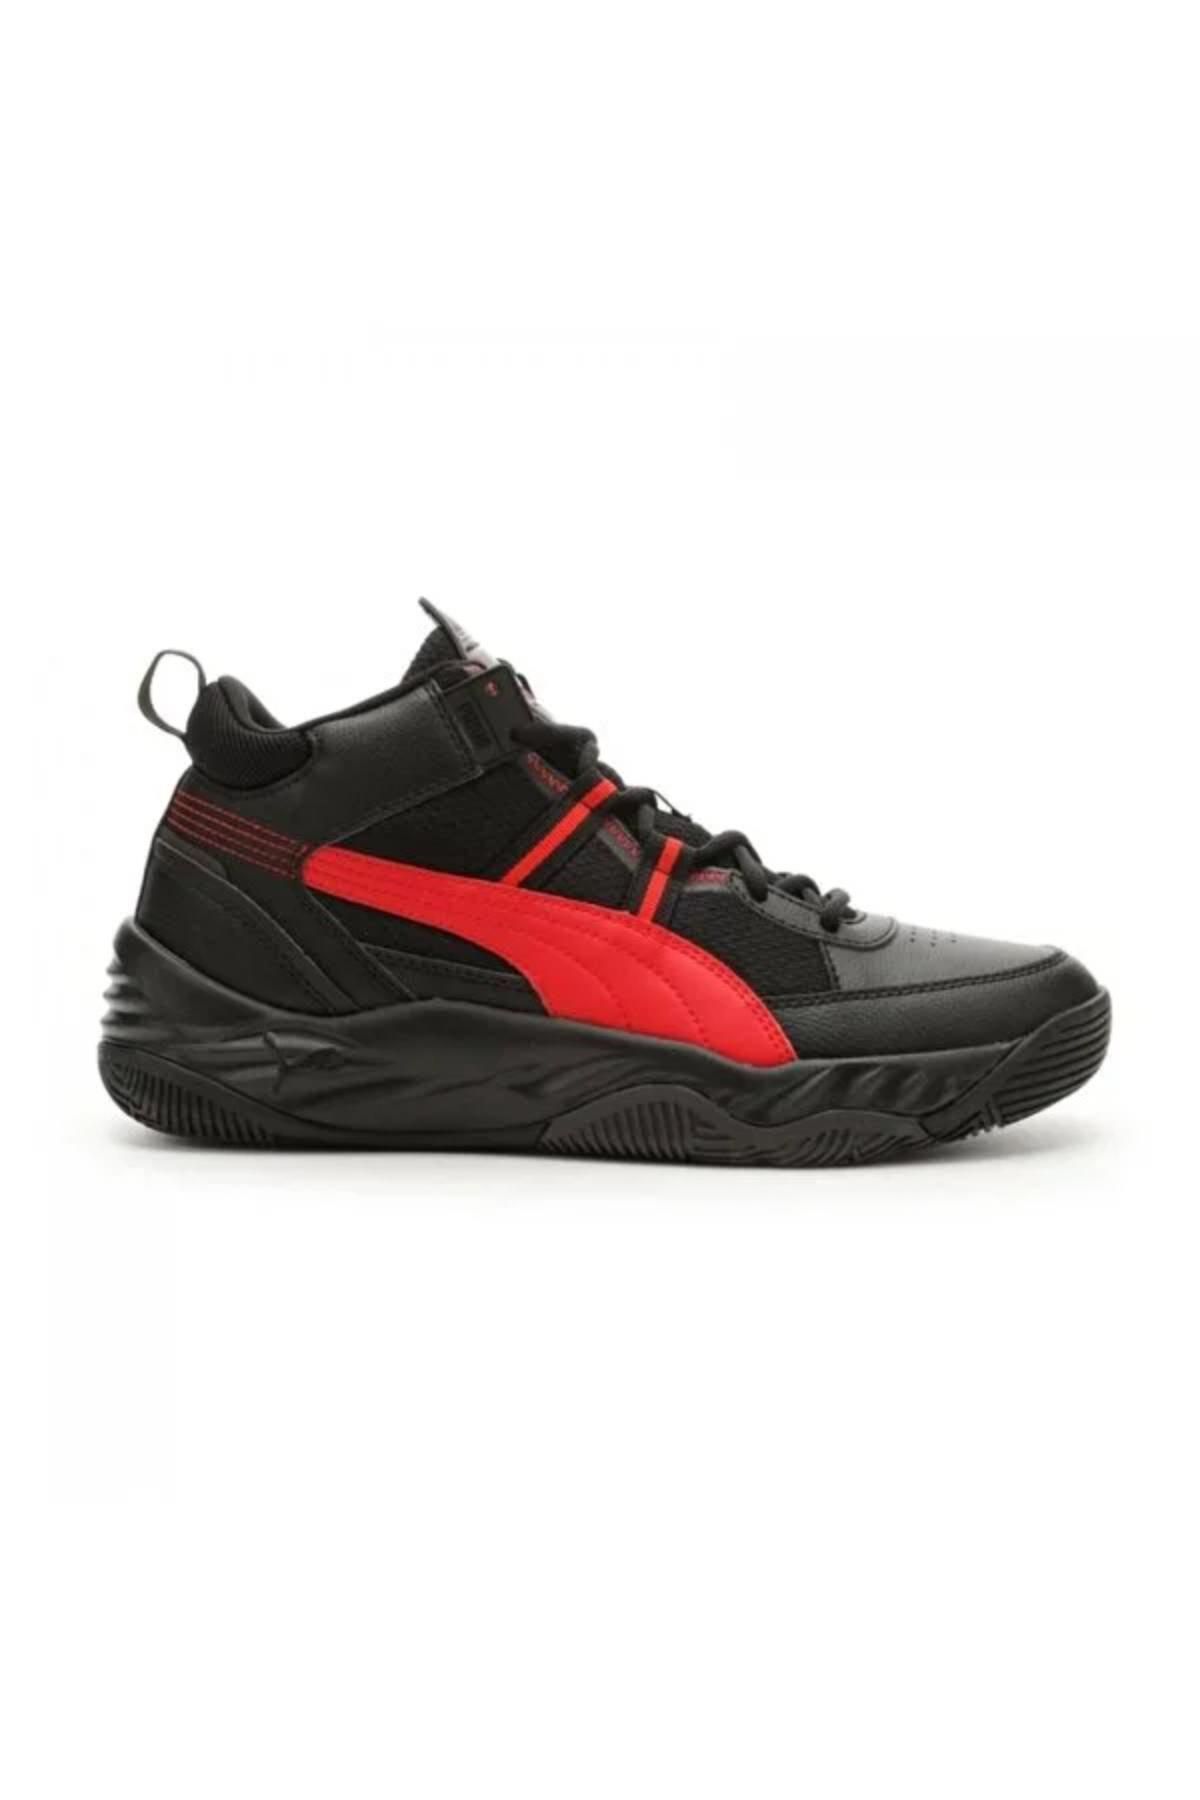 Puma Siyah- Kırmızı Rebound Future Nextgen Basketbol Ayakkabı Vo39232903